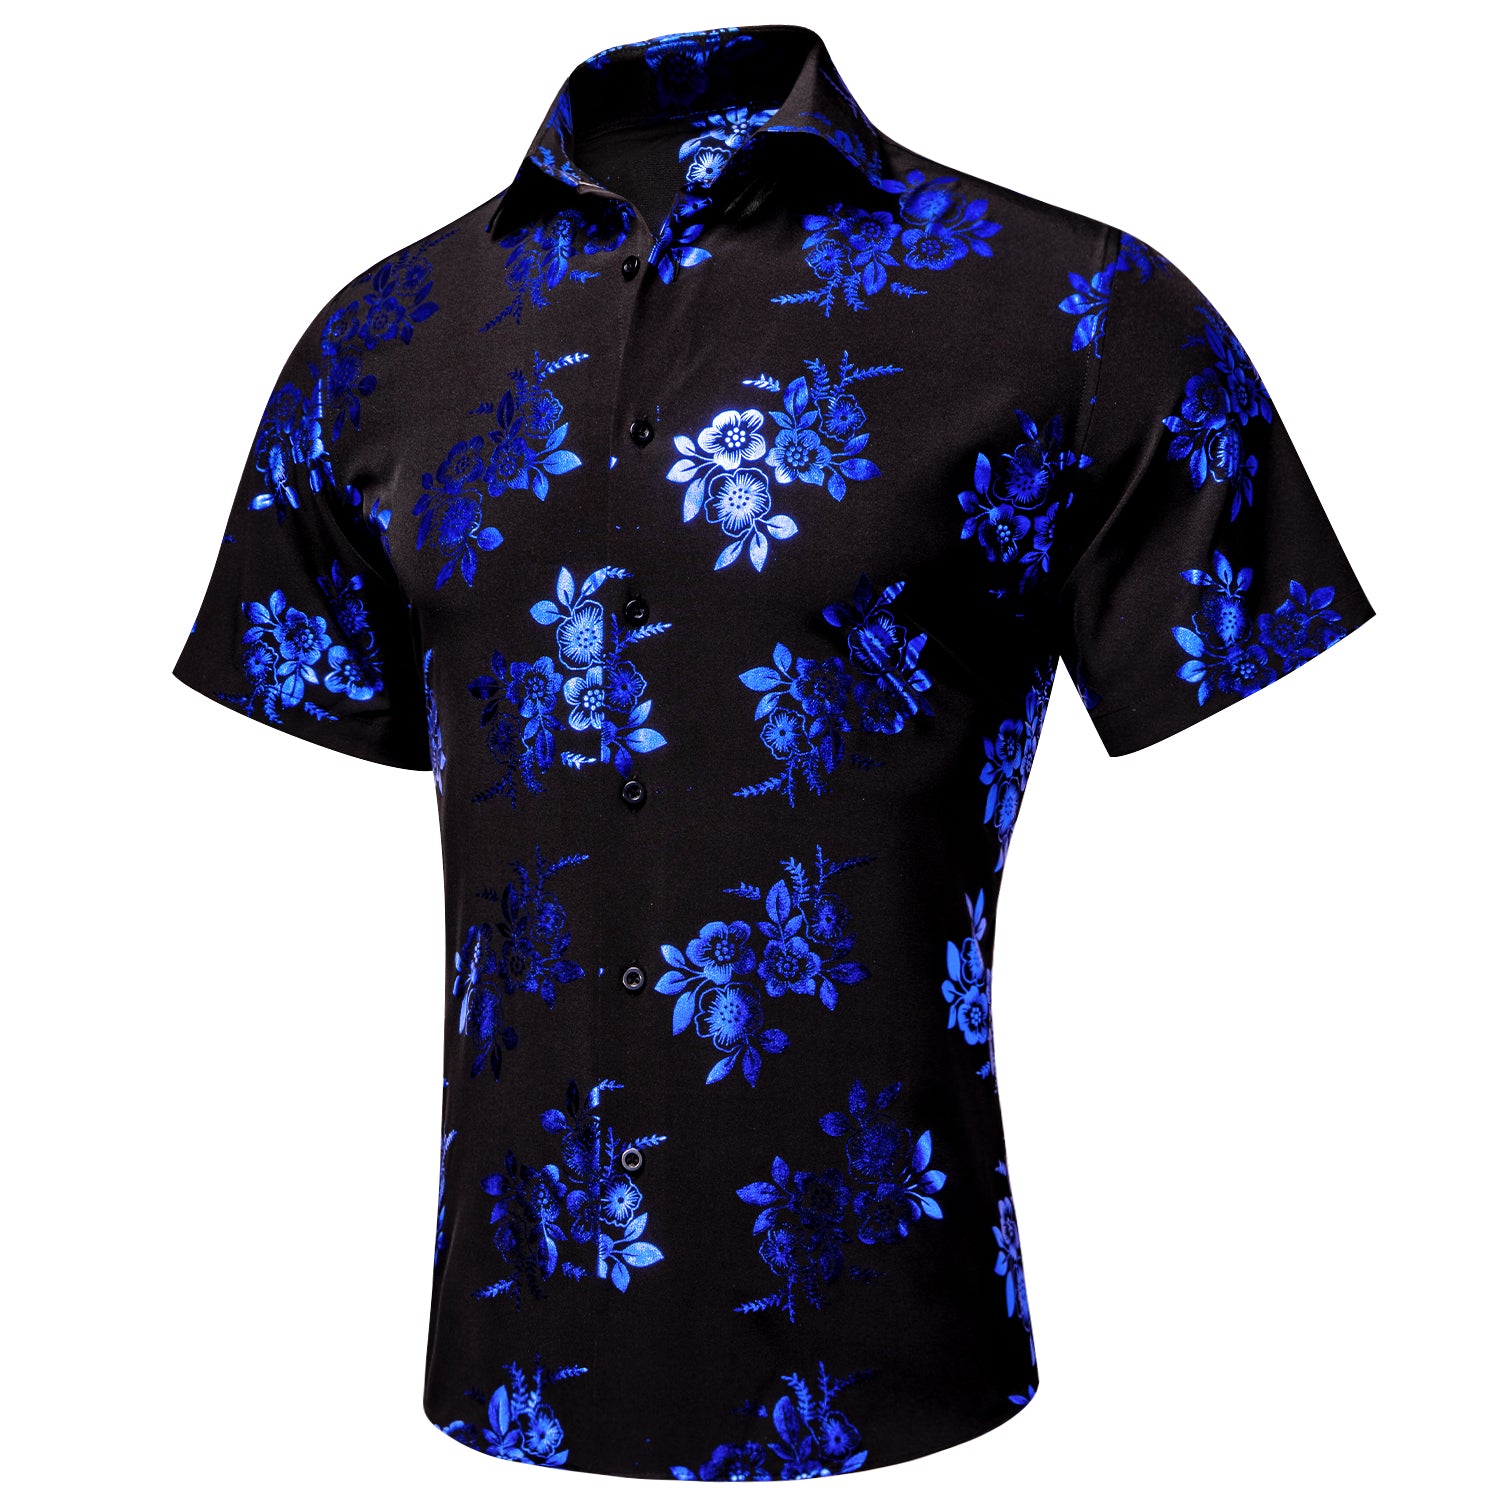 Clearance Sale New Black Blue Floral Men's Short Sleeve Shirt